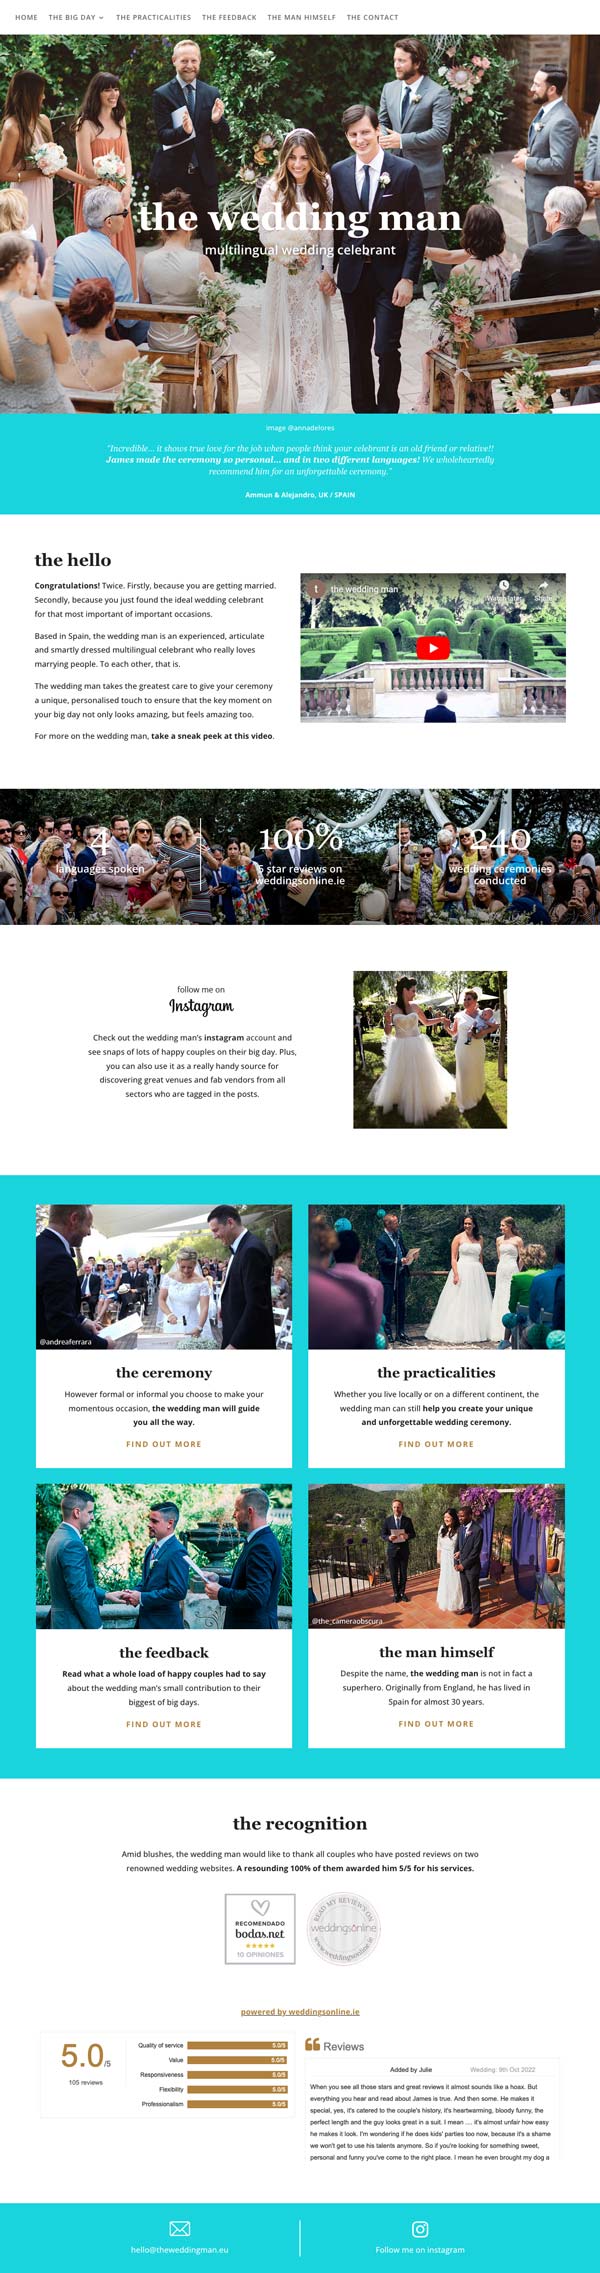 The wedding man website design